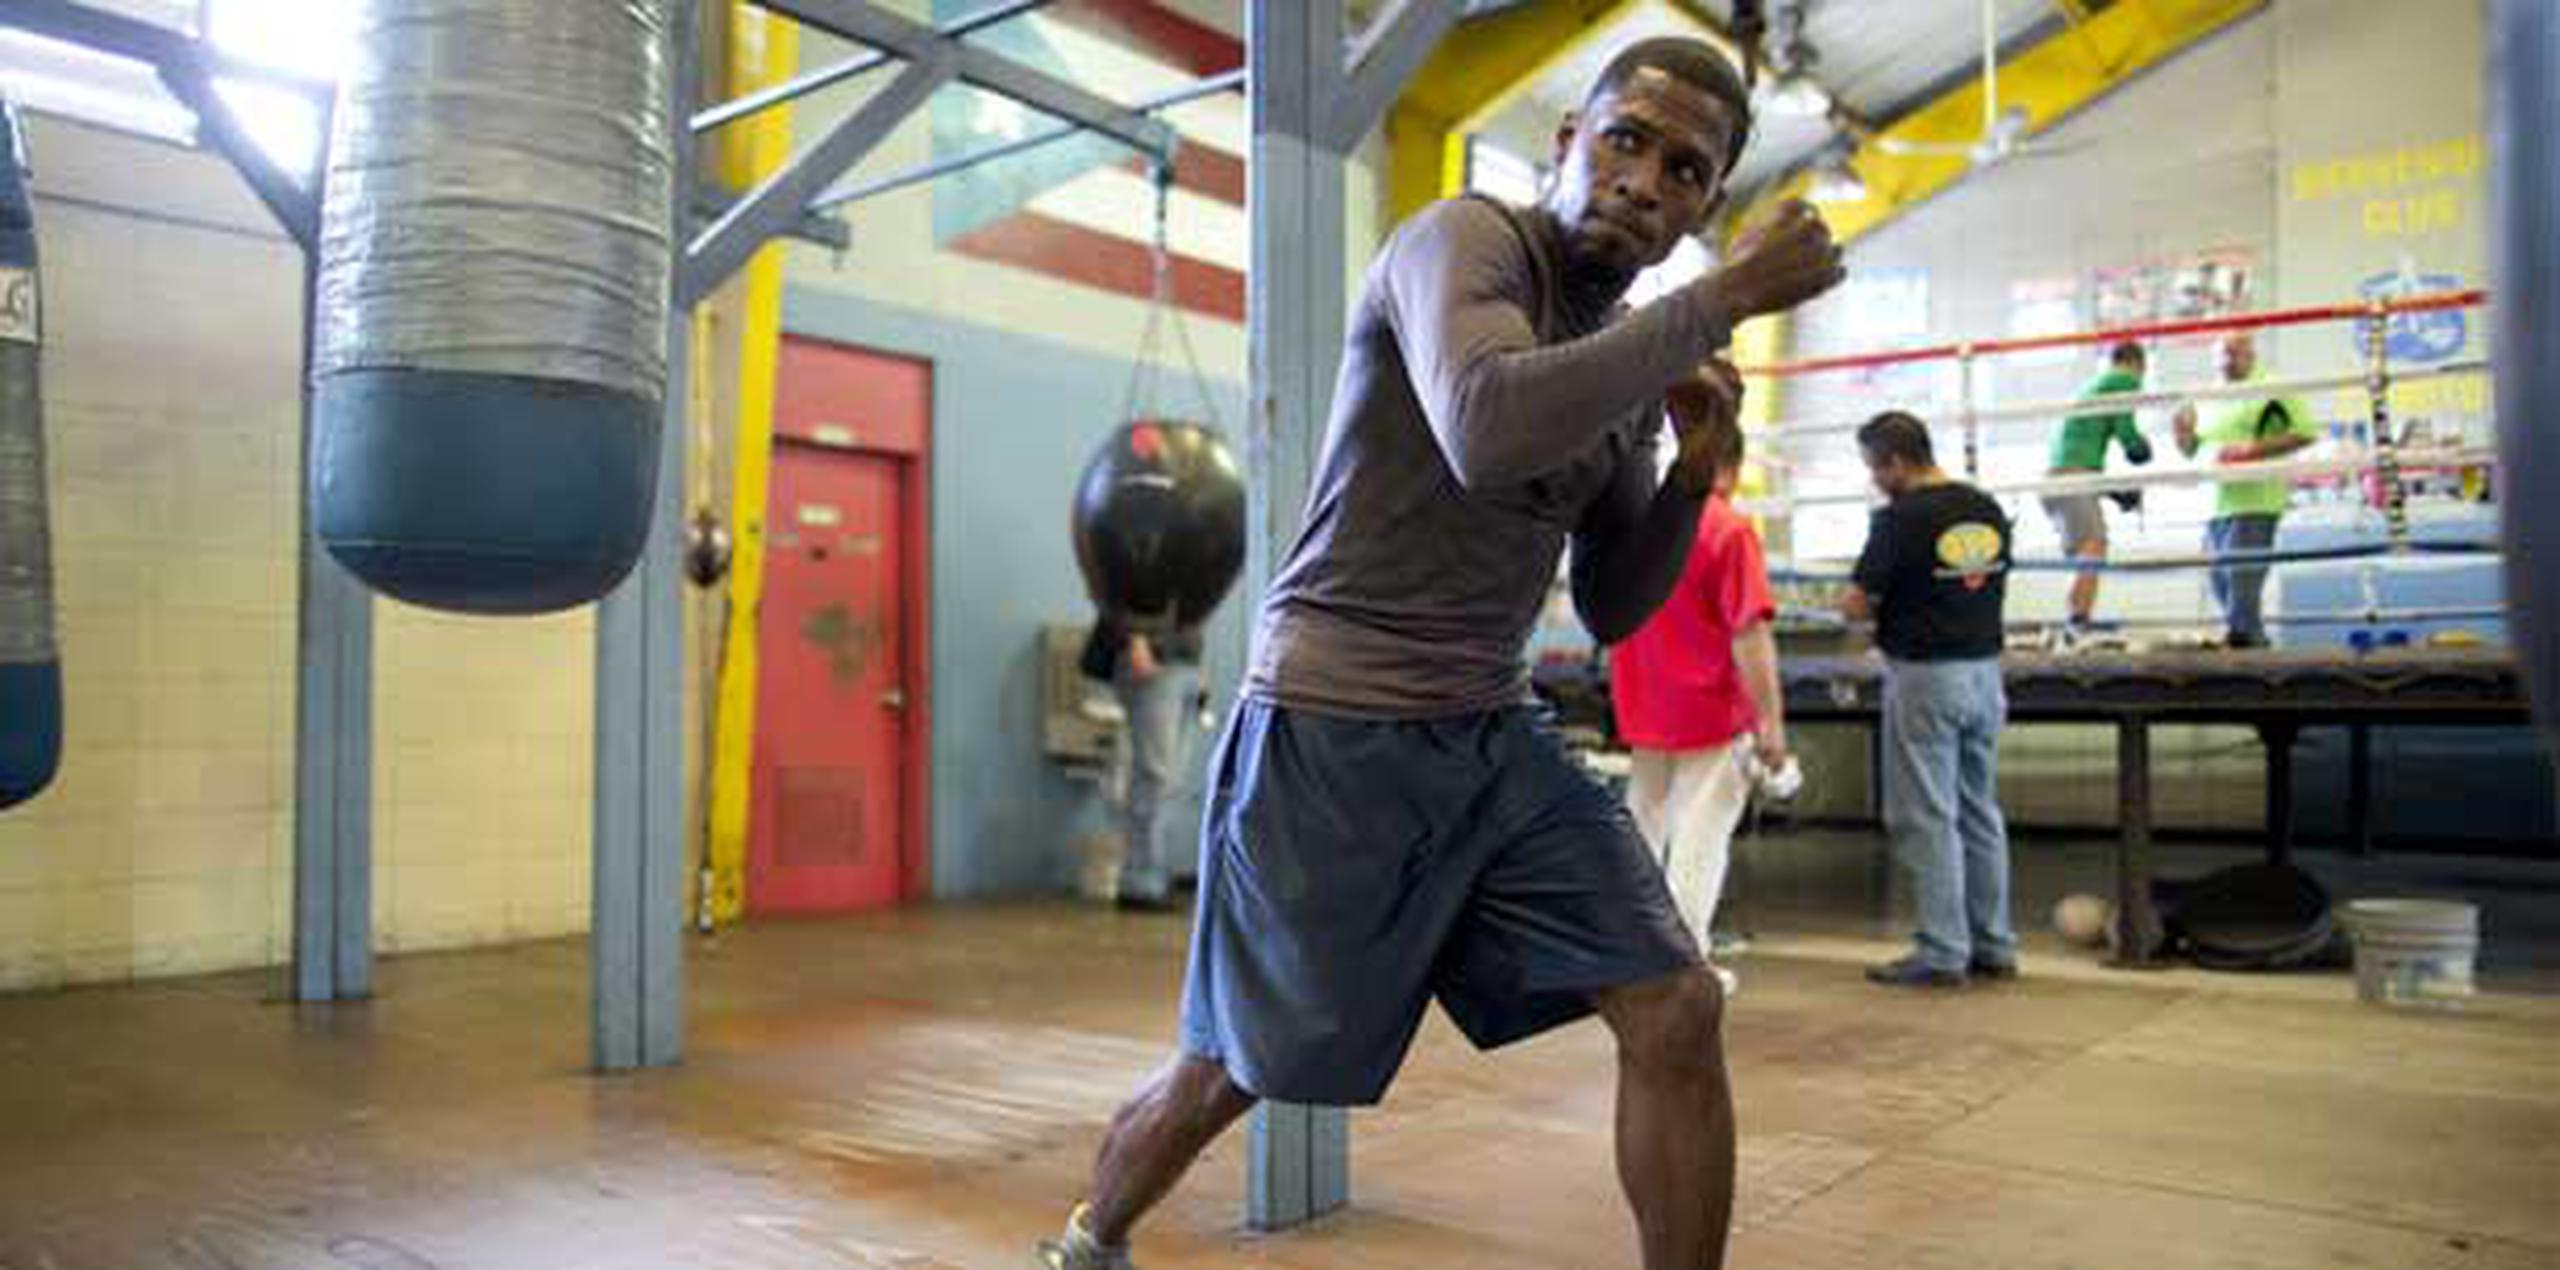 El peleador se ejercitó ayer frente a los medios en el gimnasio de Caimito. (tonito.zayas@gfrmedia.com)